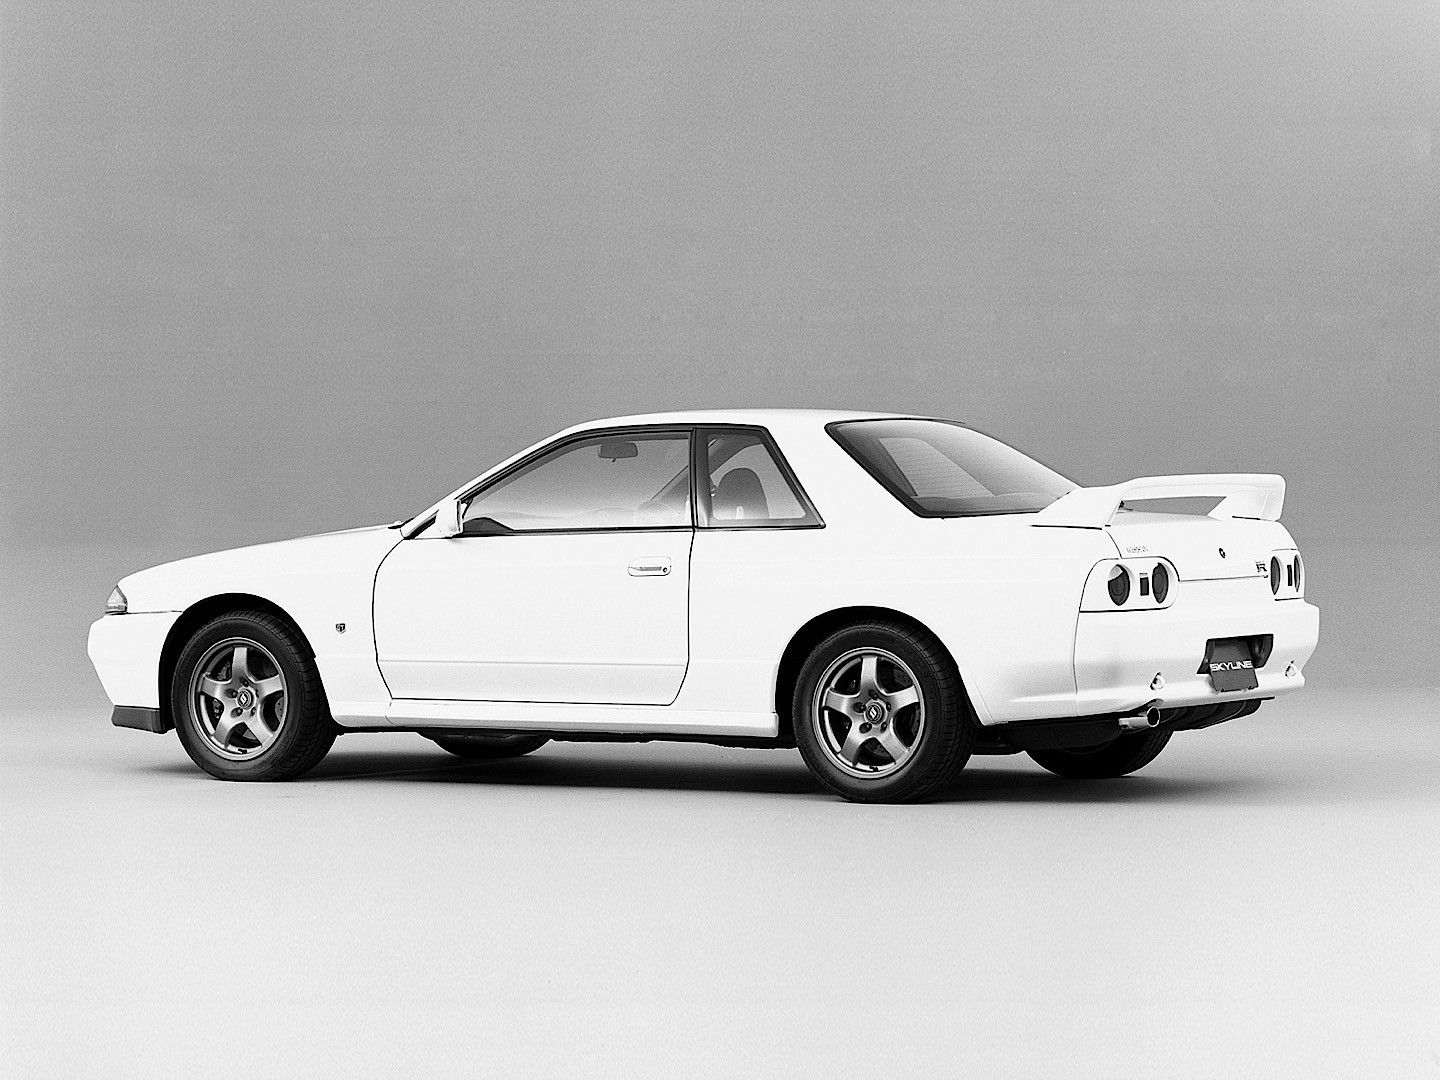 1994 Nissan skyline gtr review #6